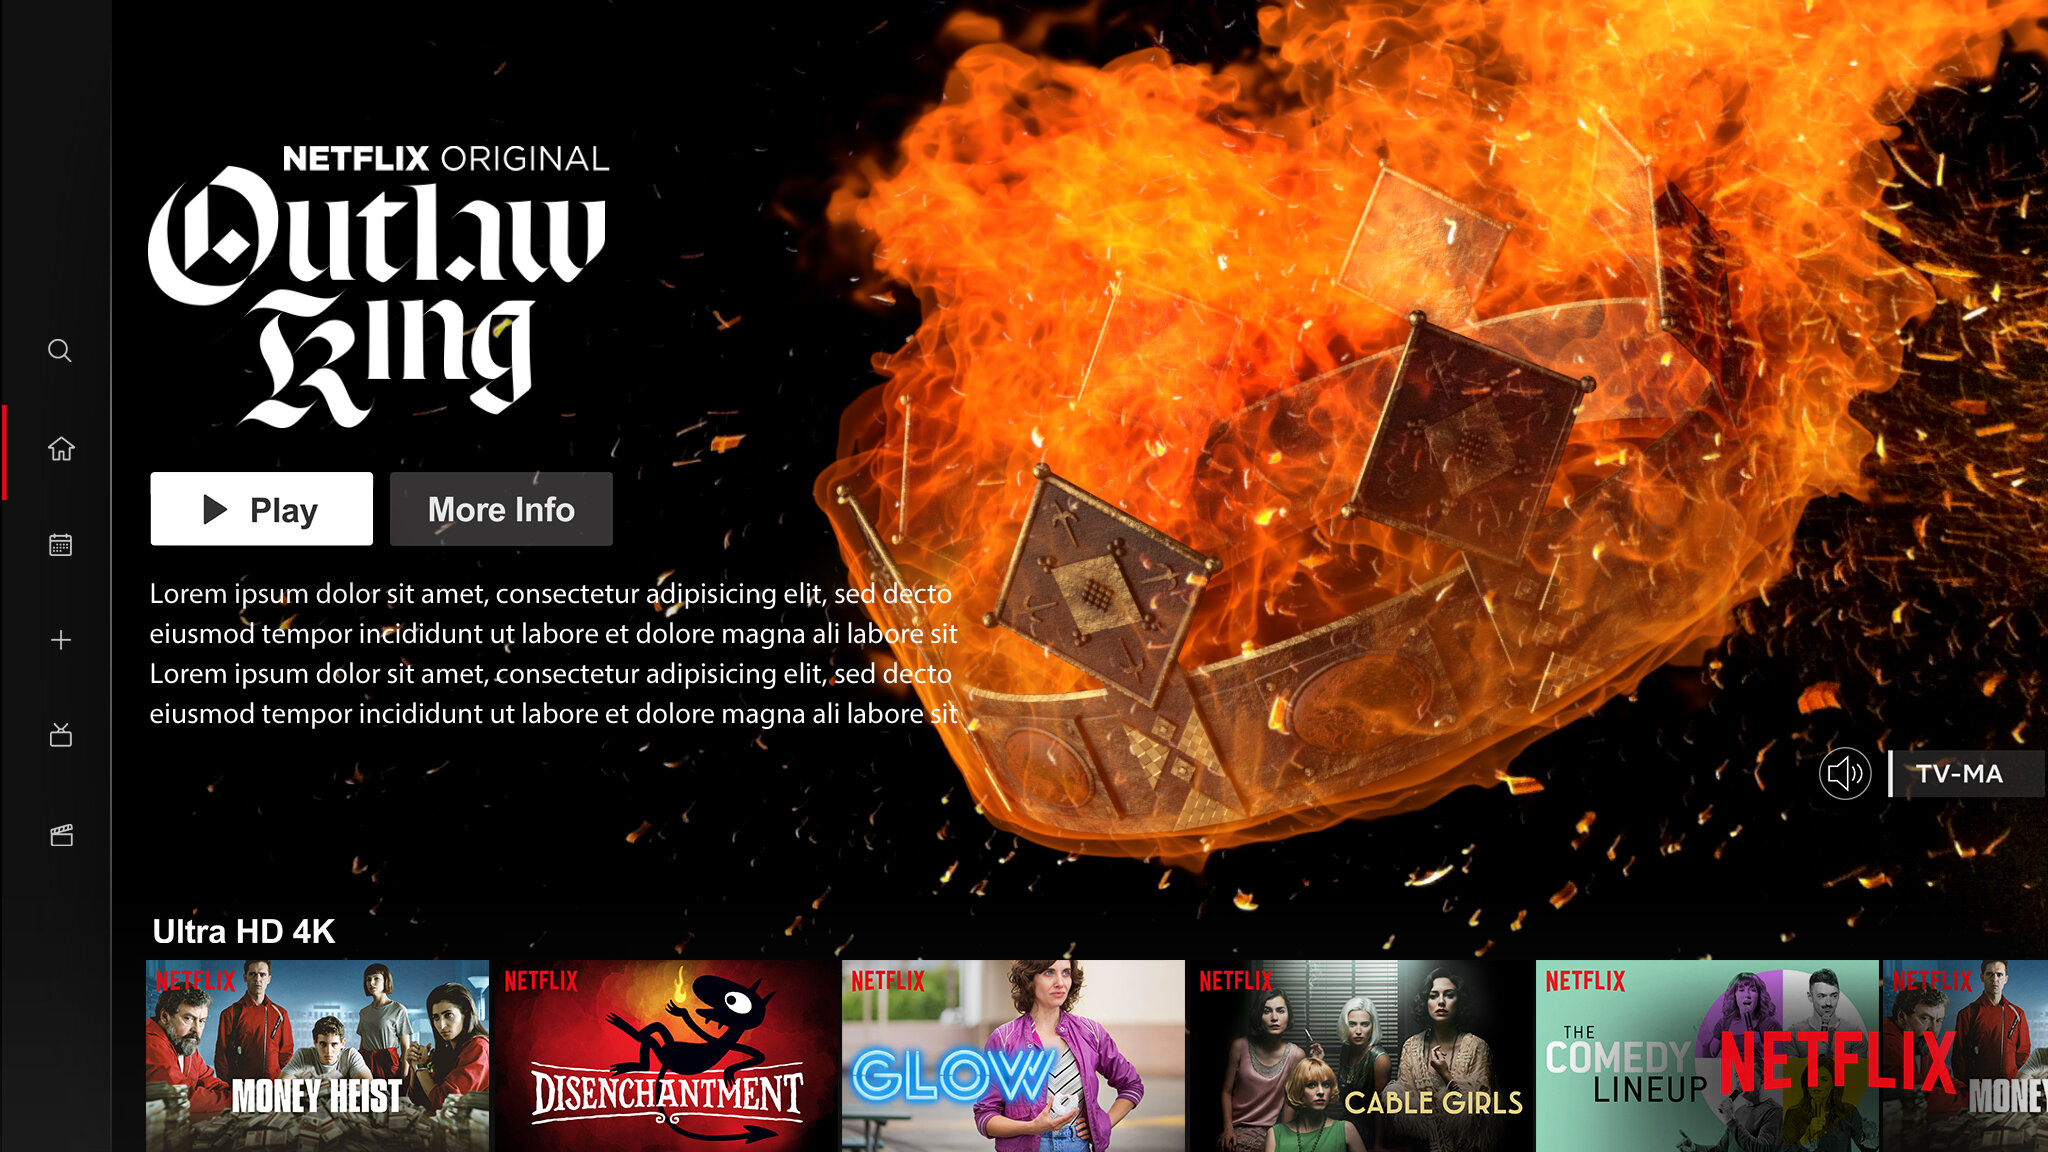 Outlaw King__Netflix Billboard TEMPLATE_Crown Burning.jpg